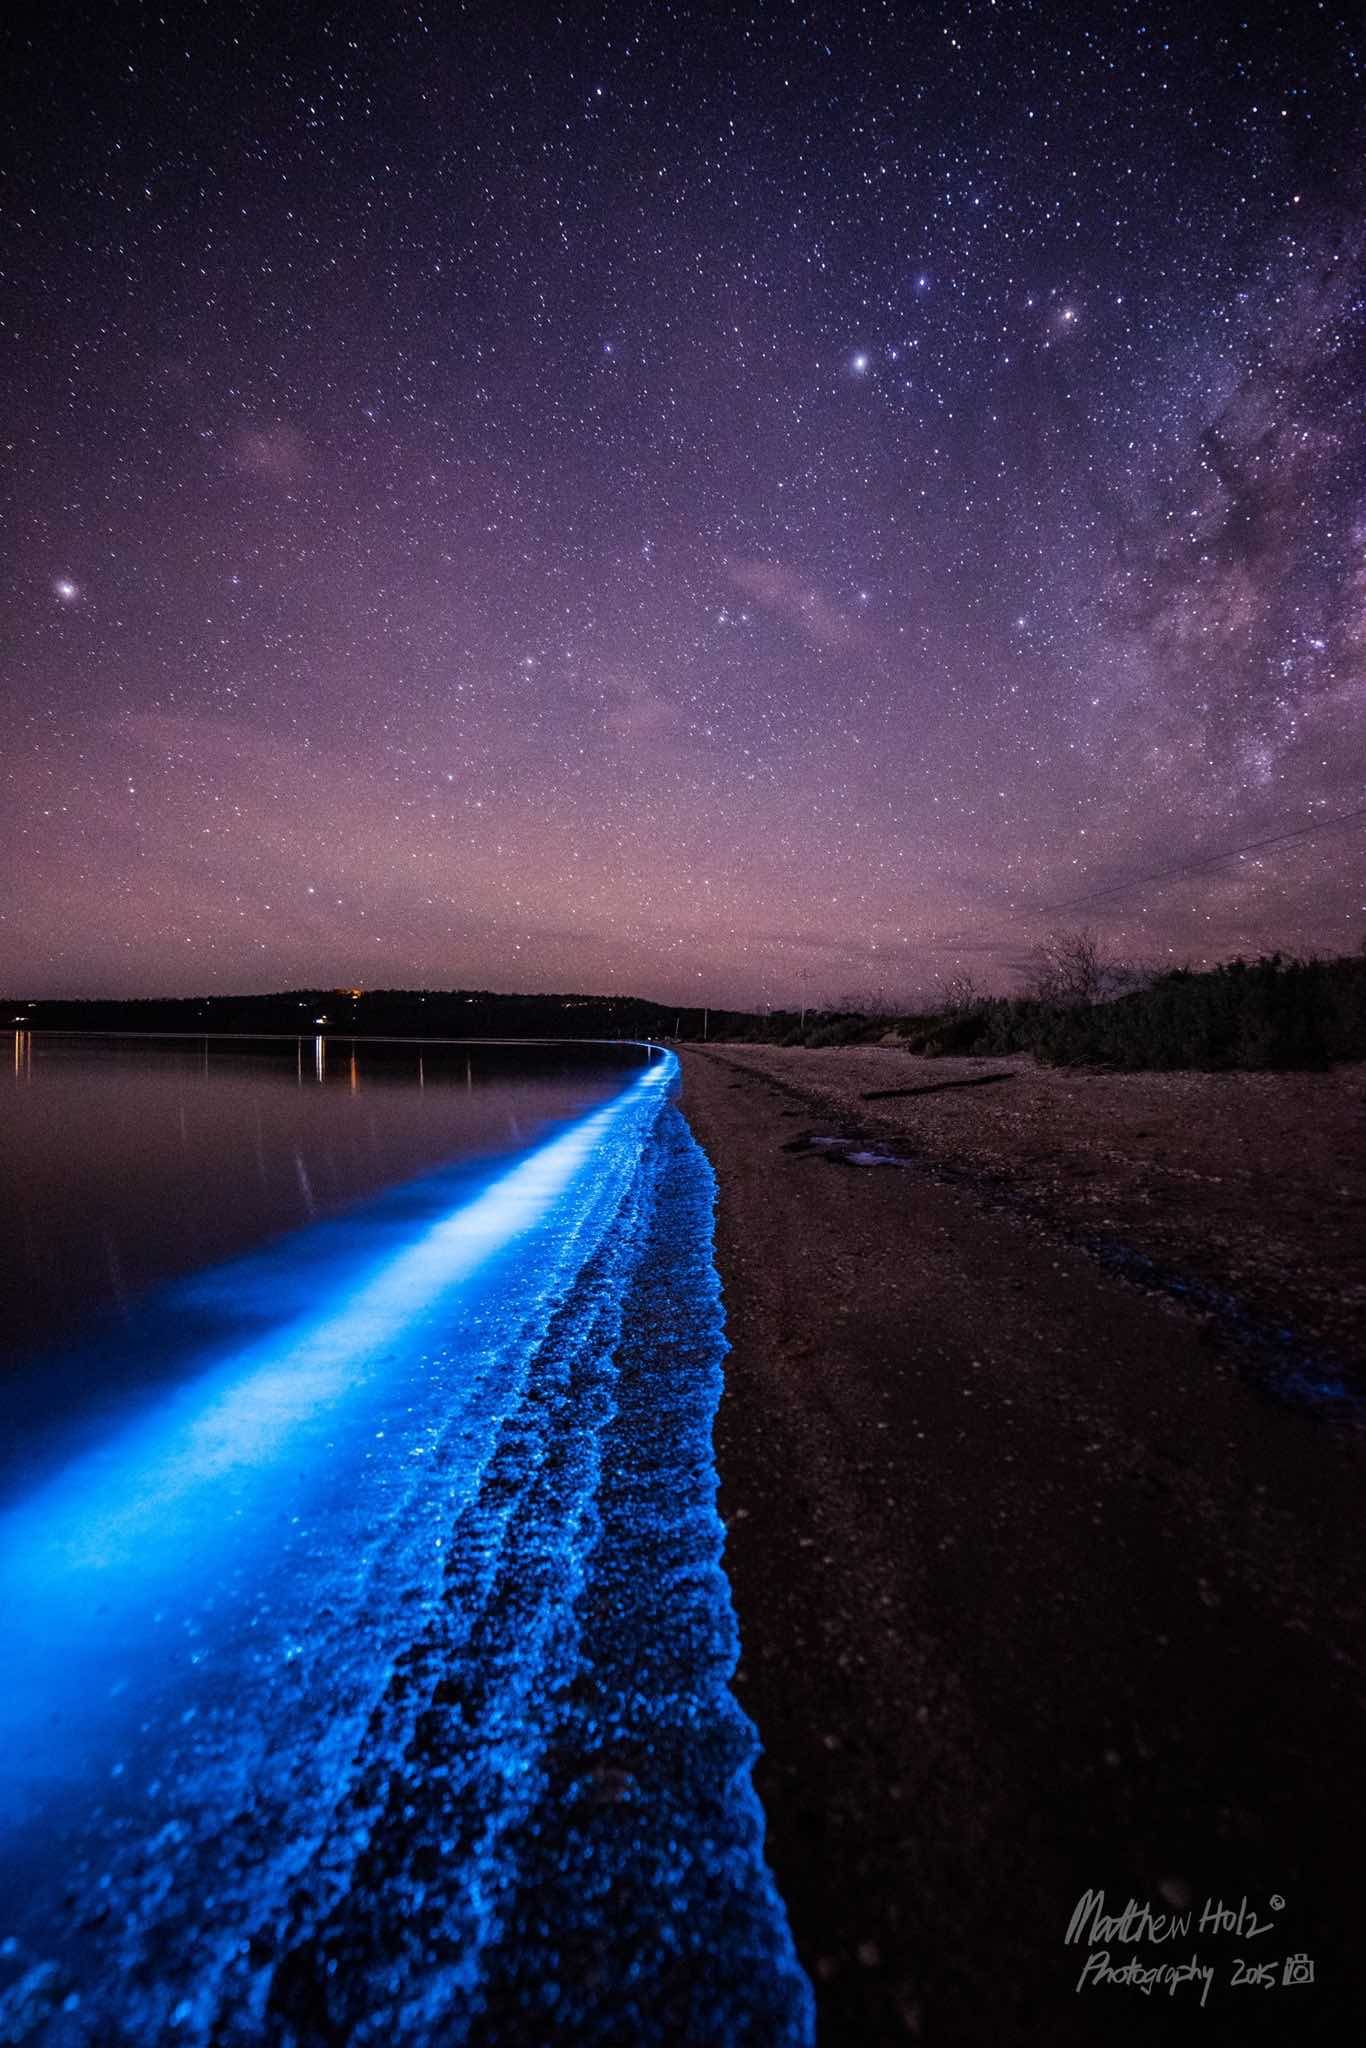 Spectacular Photograph Captures Bioluminescent Plankton And Aurora